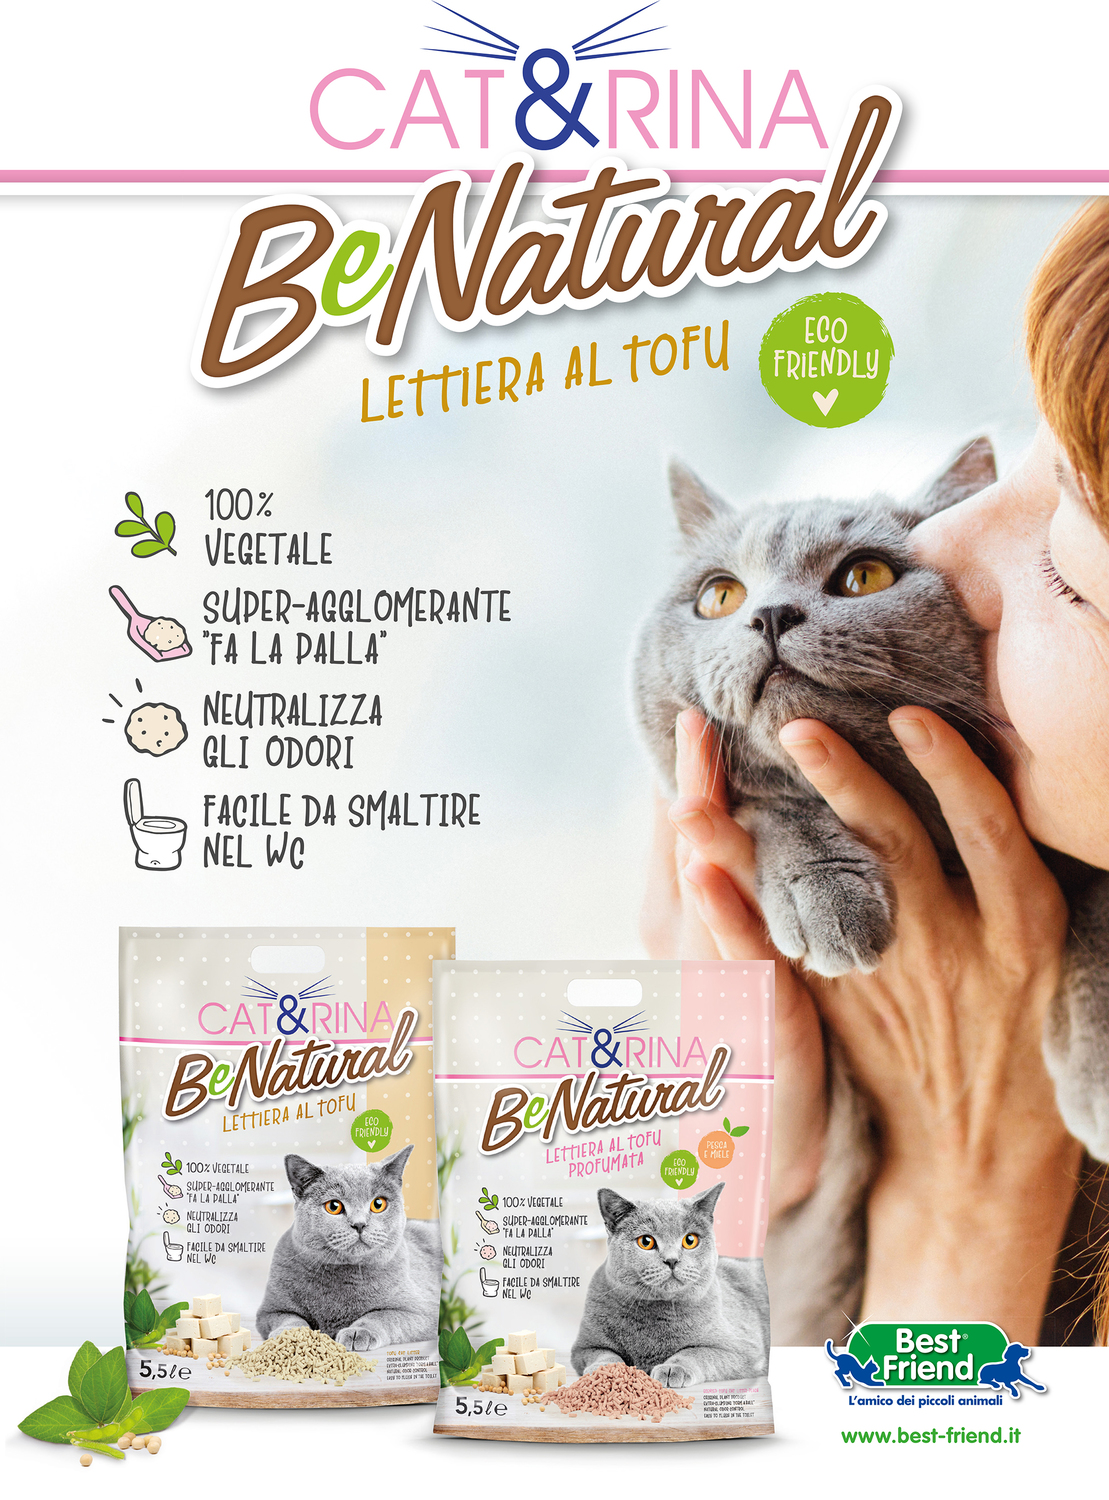 Cat&Rina BeNatural: la lettiera al tofu eco-friendly